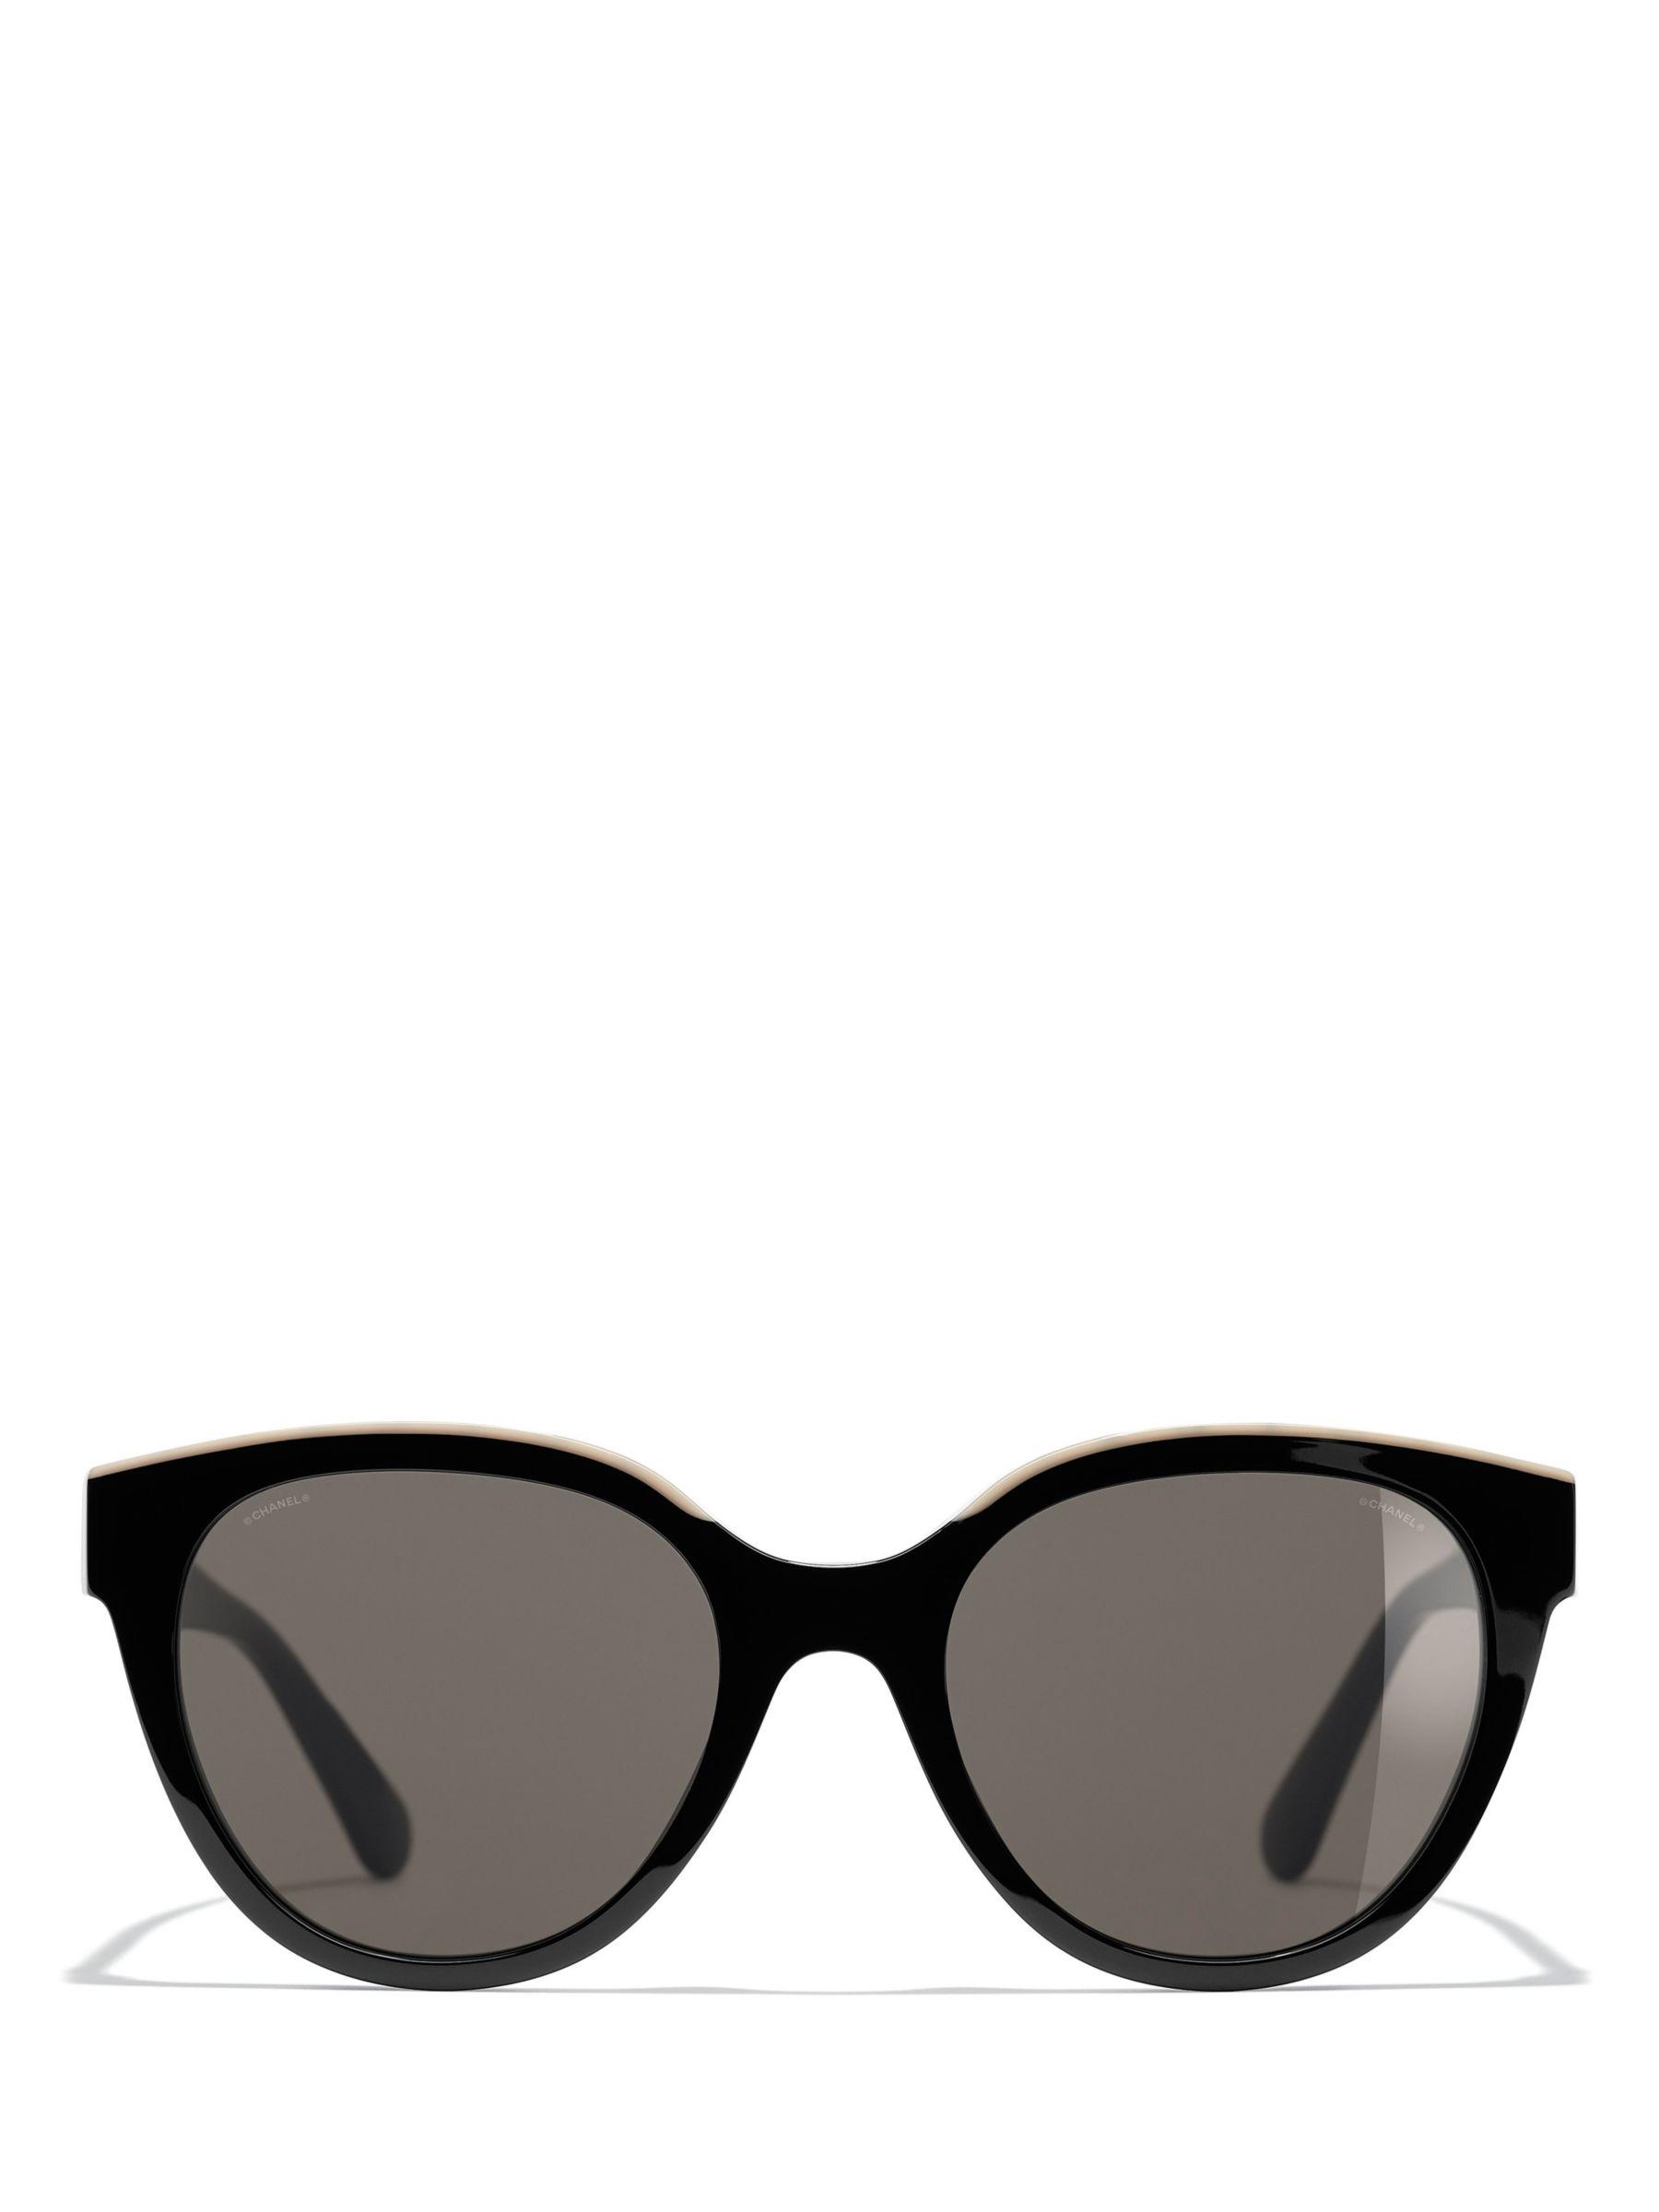 Chanel Oval Sunglasses Ch5414 Black/beige